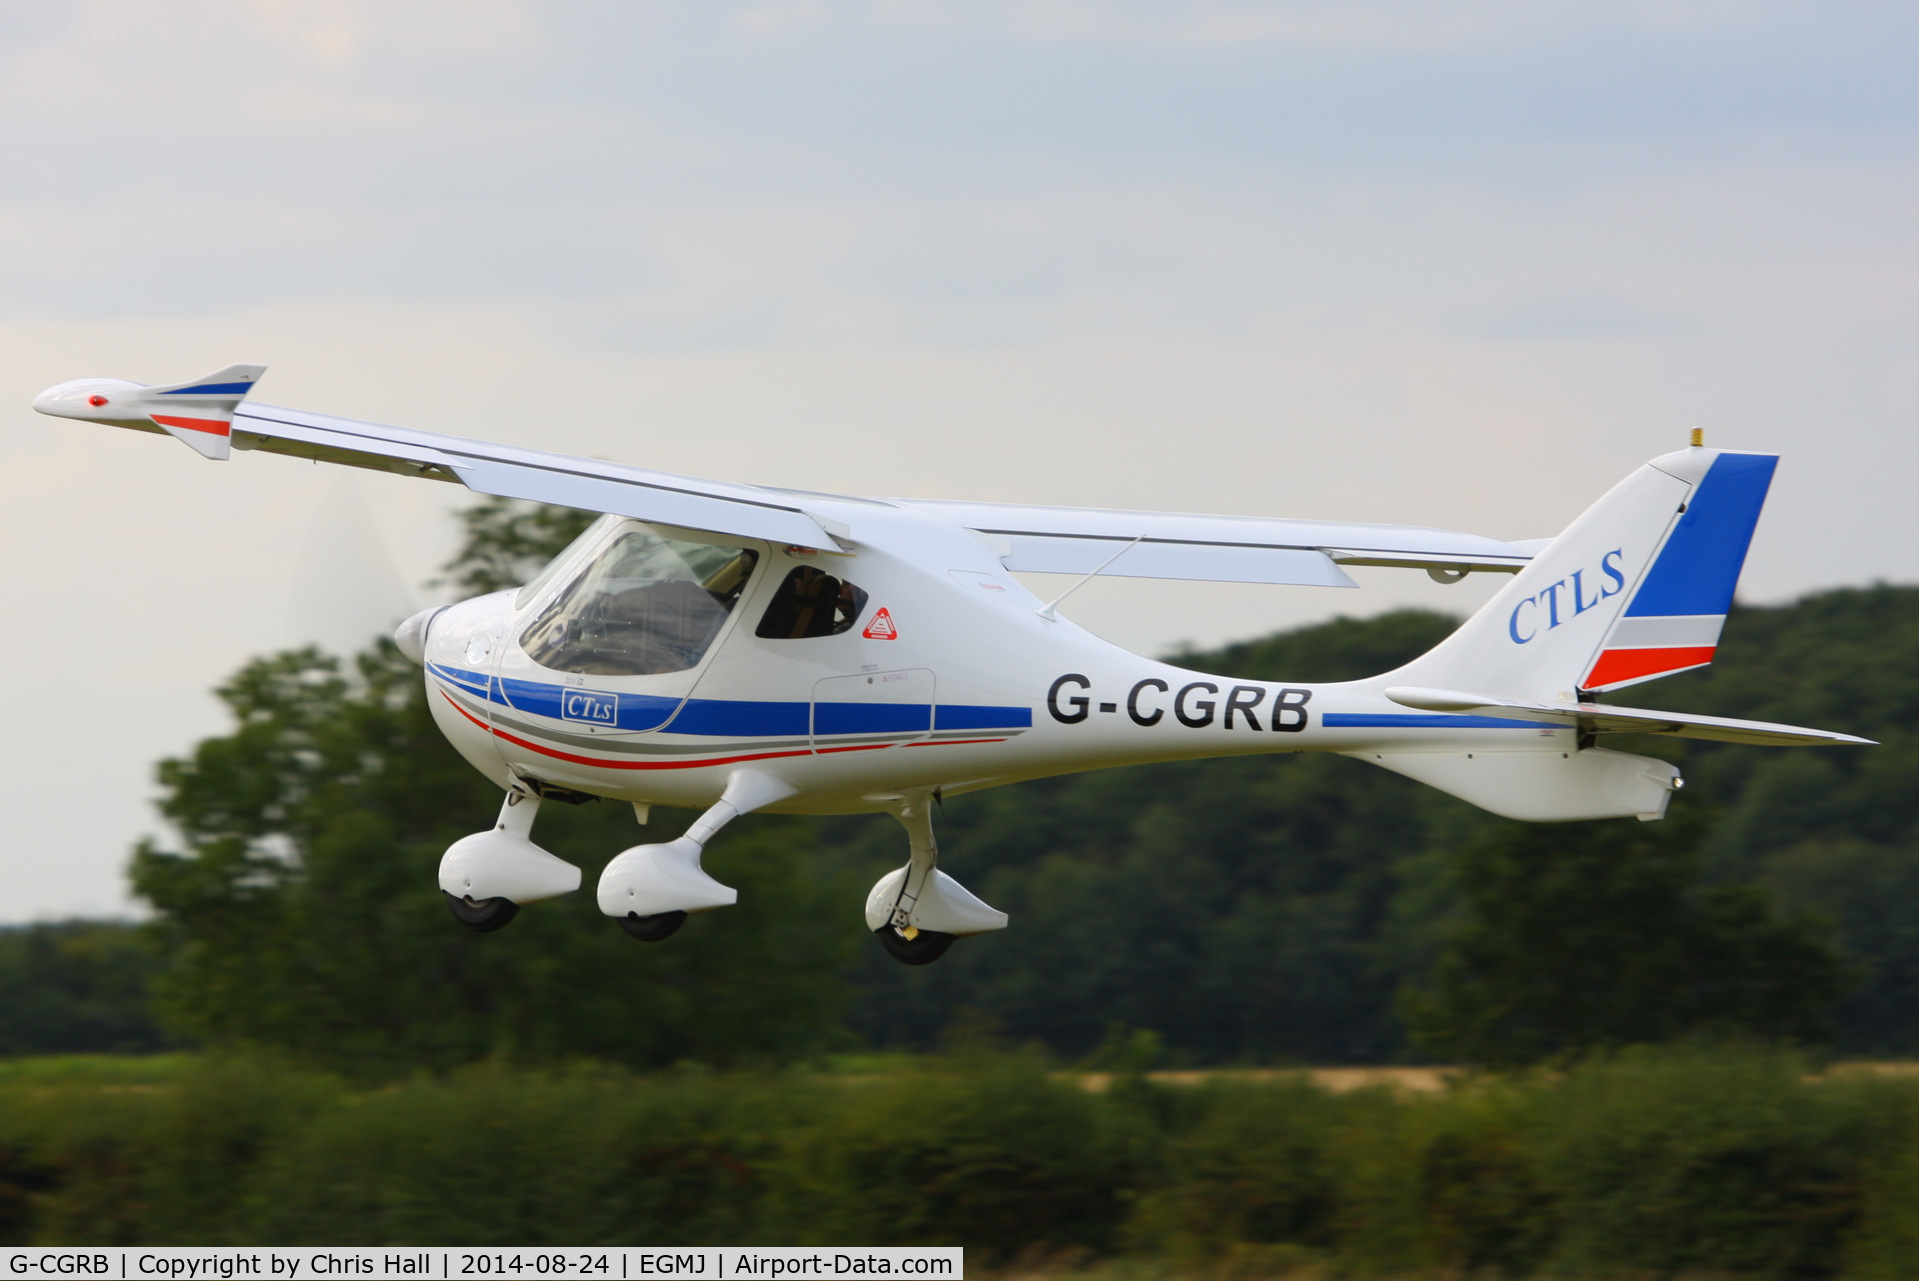 G-CGRB, 2010 Flight Design CT-LS C/N F-10-07-10, at the Little Gransden Airshow 2014